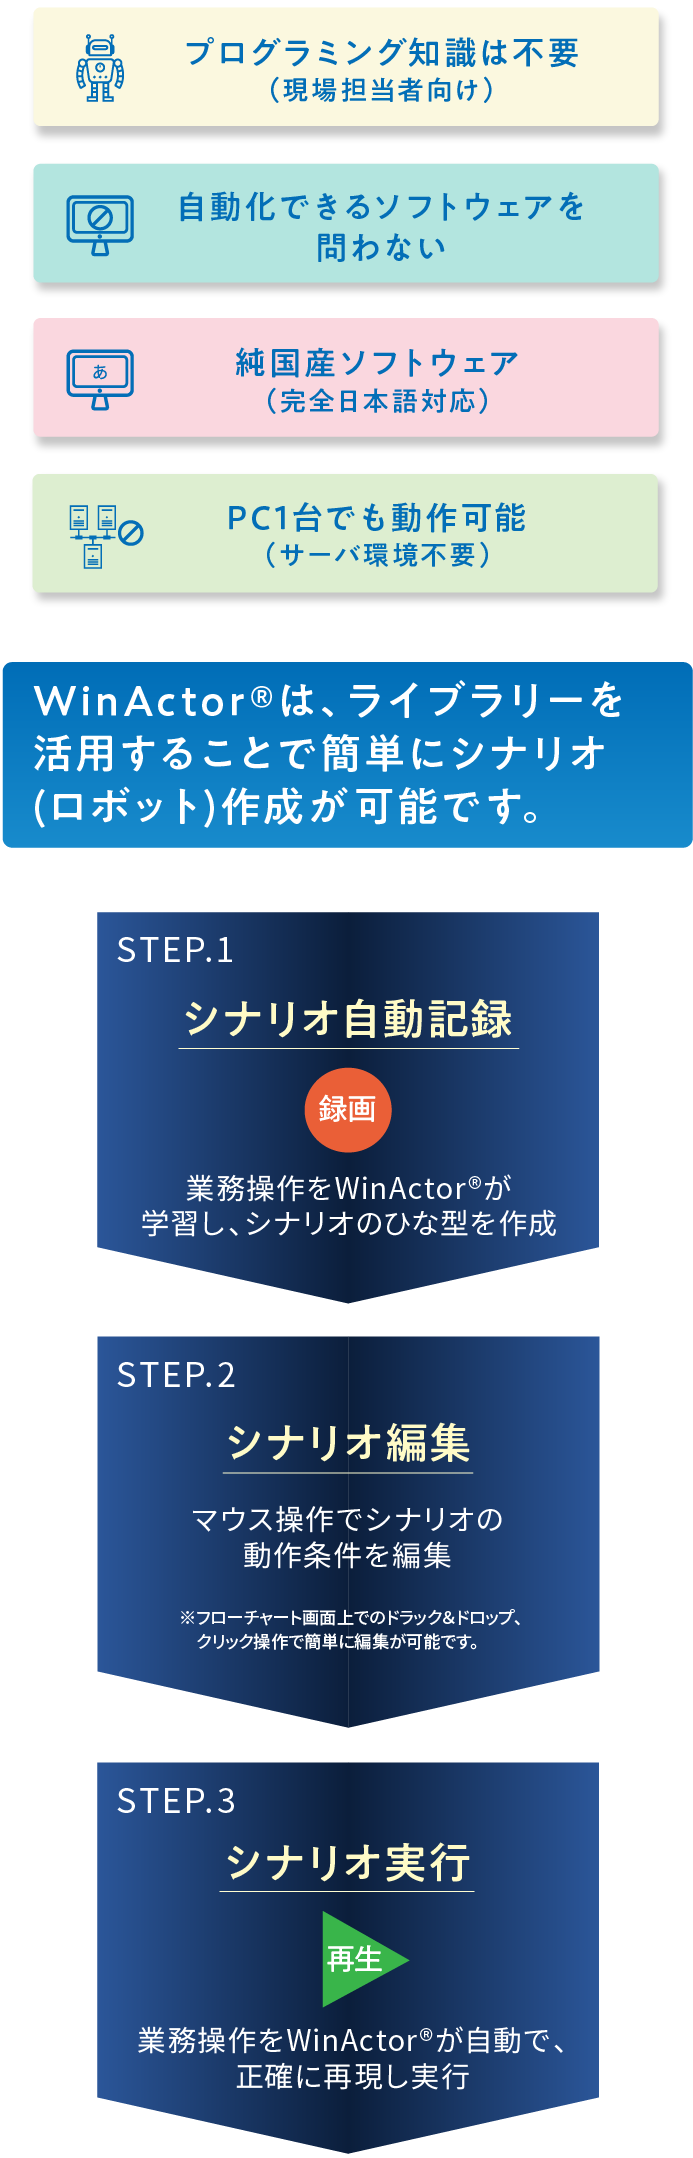 WinActor®は、ライブラリーを活用することで簡単にシナリオ（ロボット）作成が可能です。